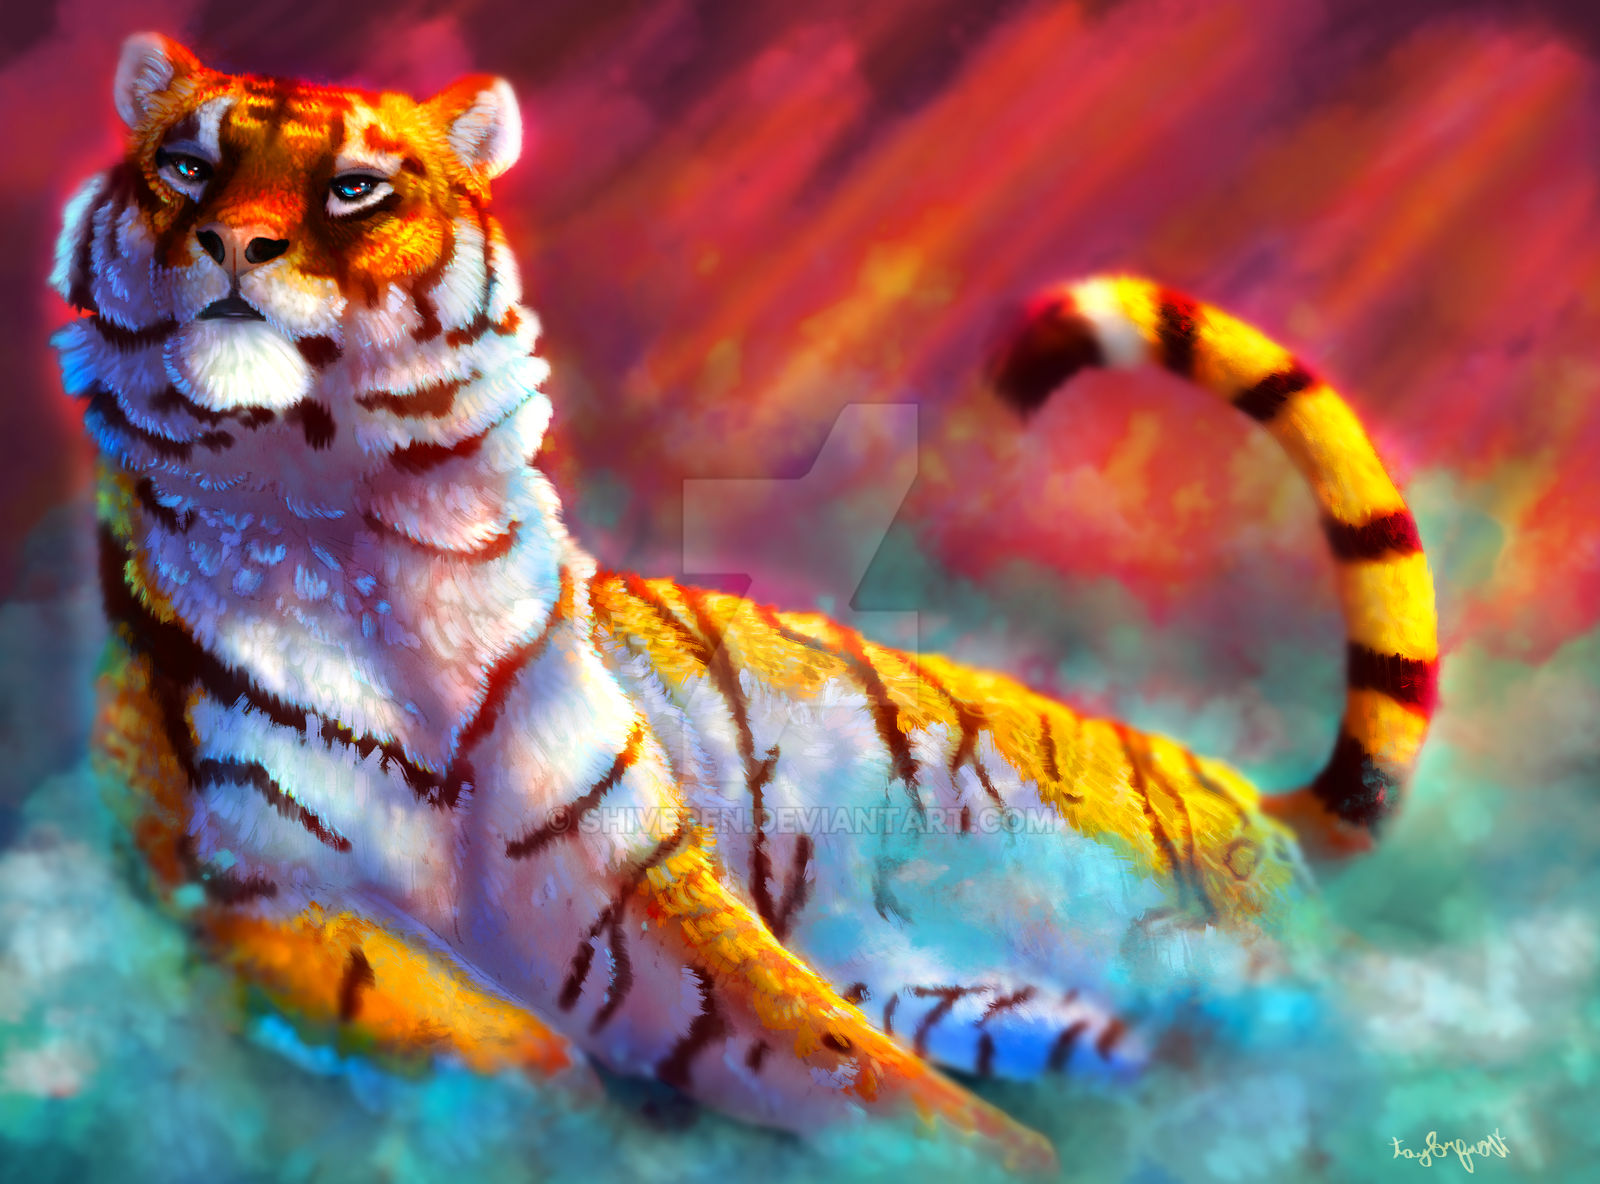 Tiger Sketchbook Cover by hibbary on DeviantArt